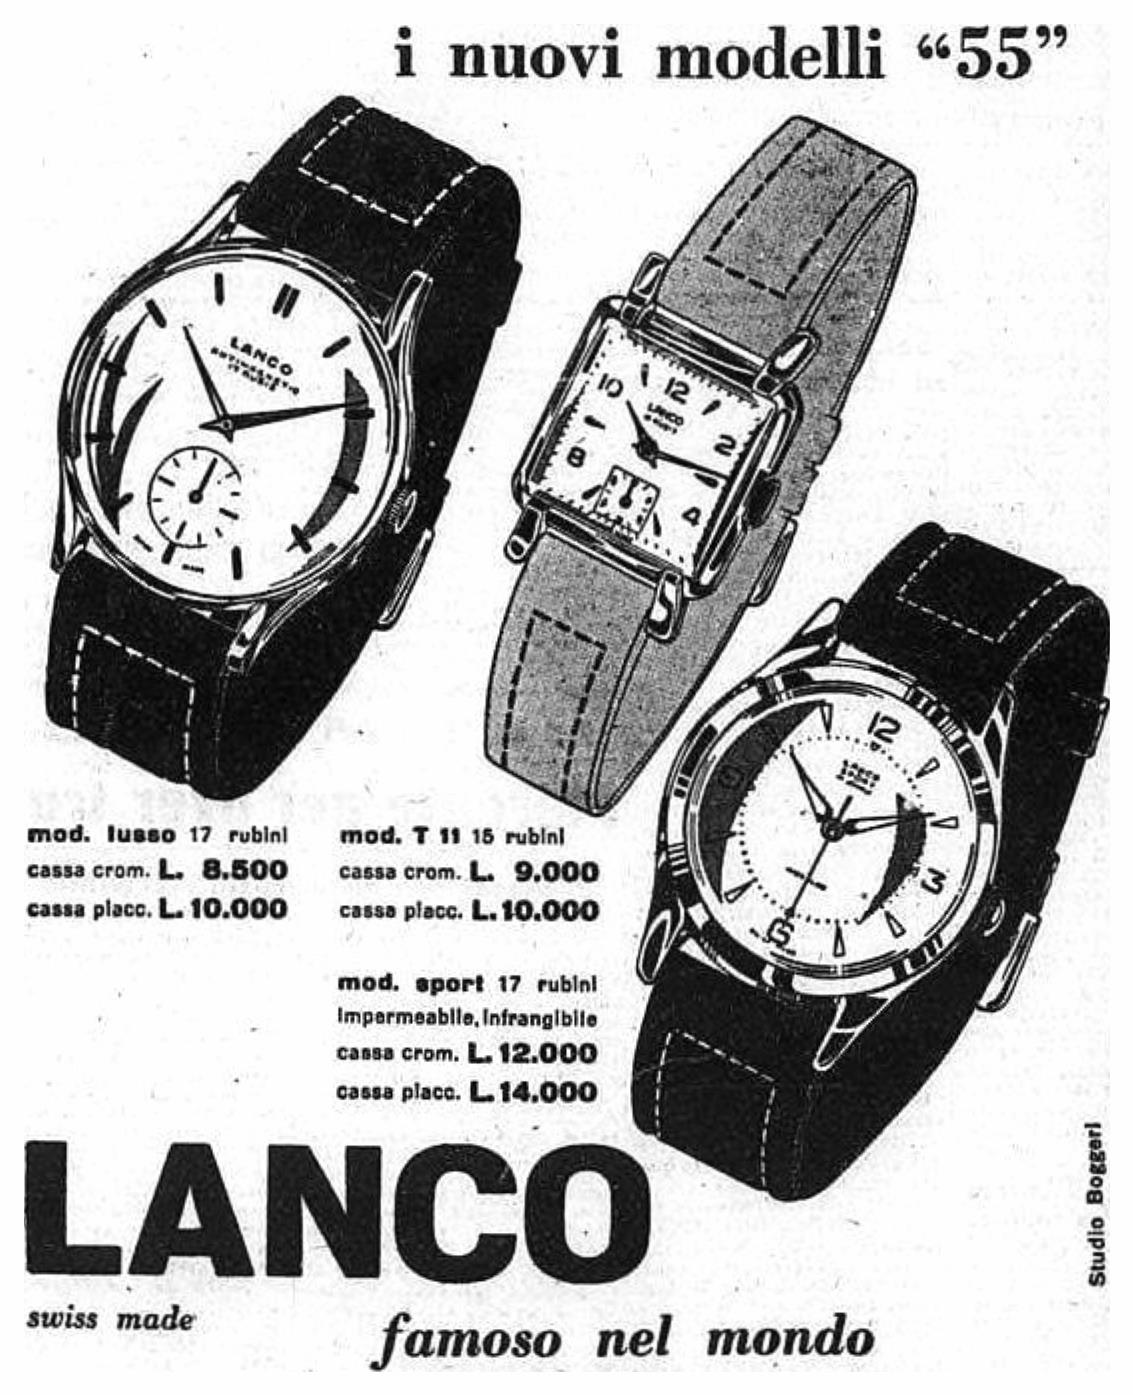 Lanco 1955 1.jpg